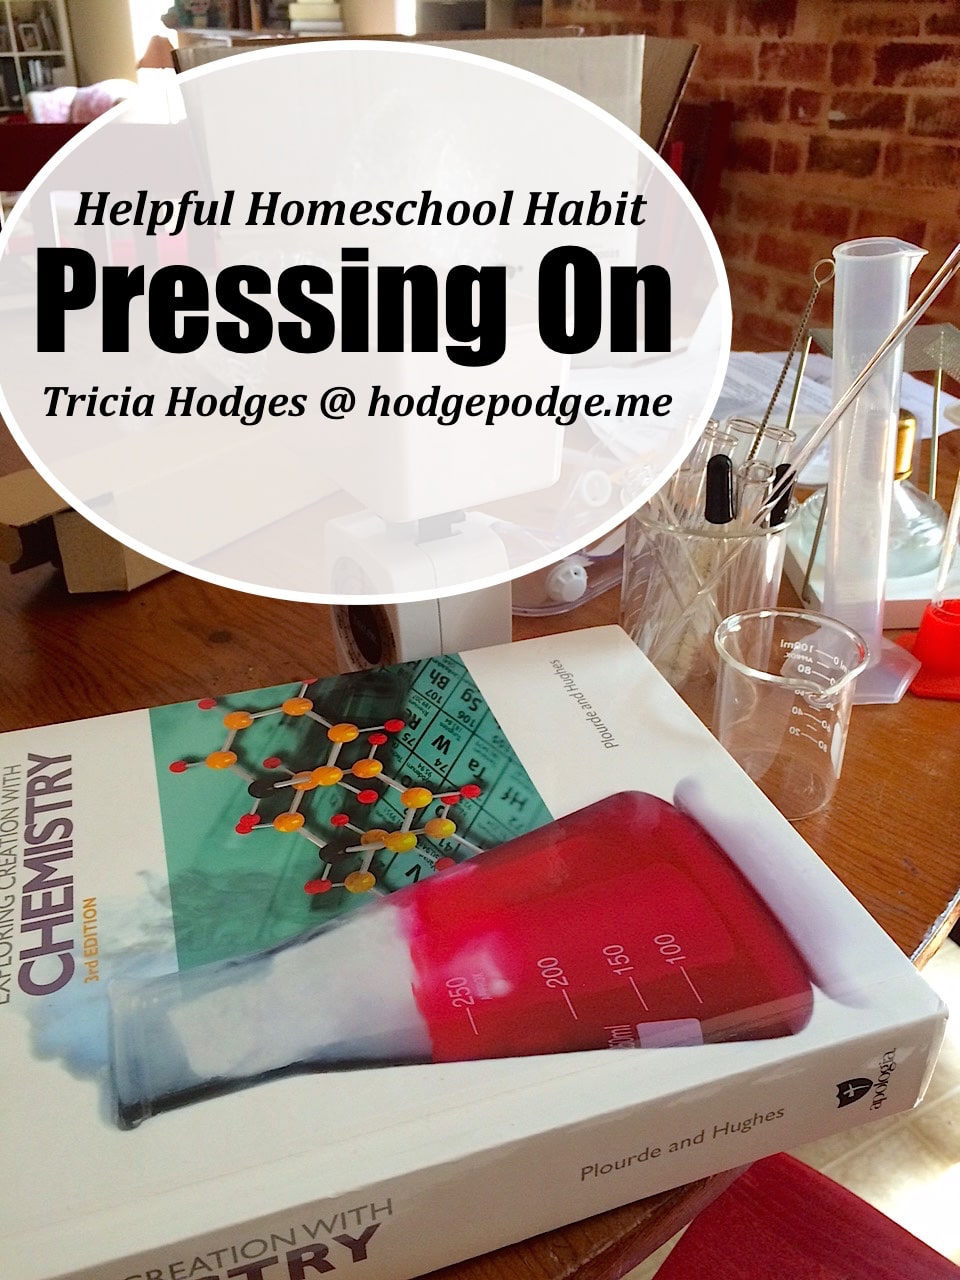 Helpful Homeschool Habit: Pressing On